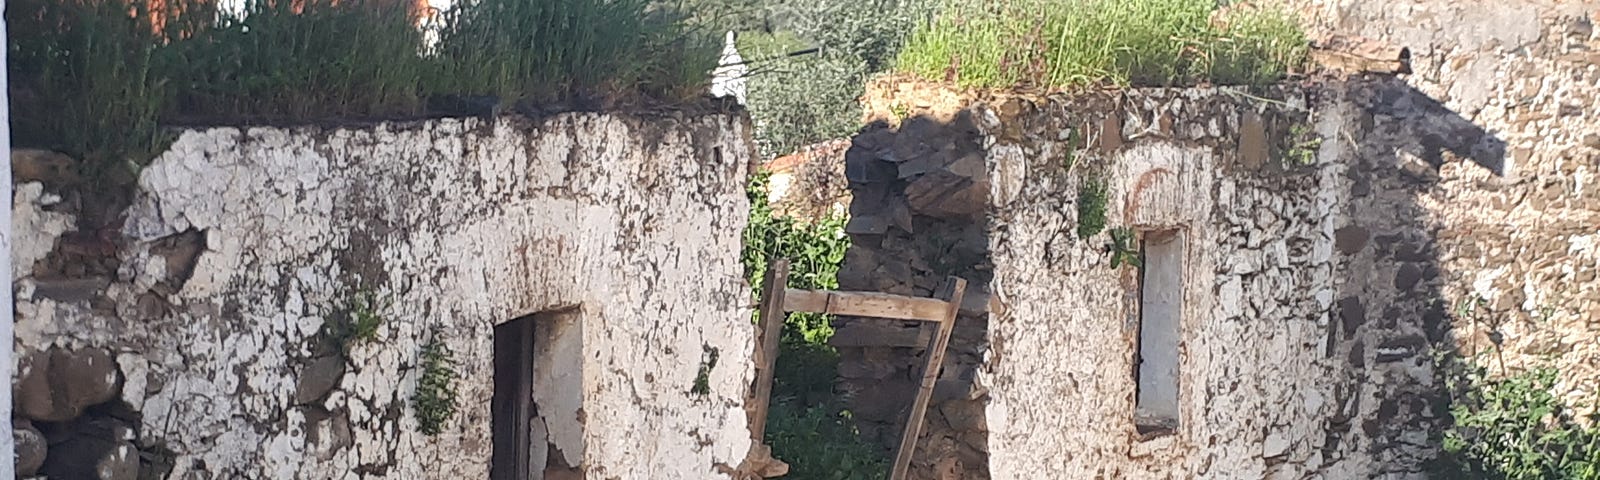 A ruin of a Portuguese rural house.